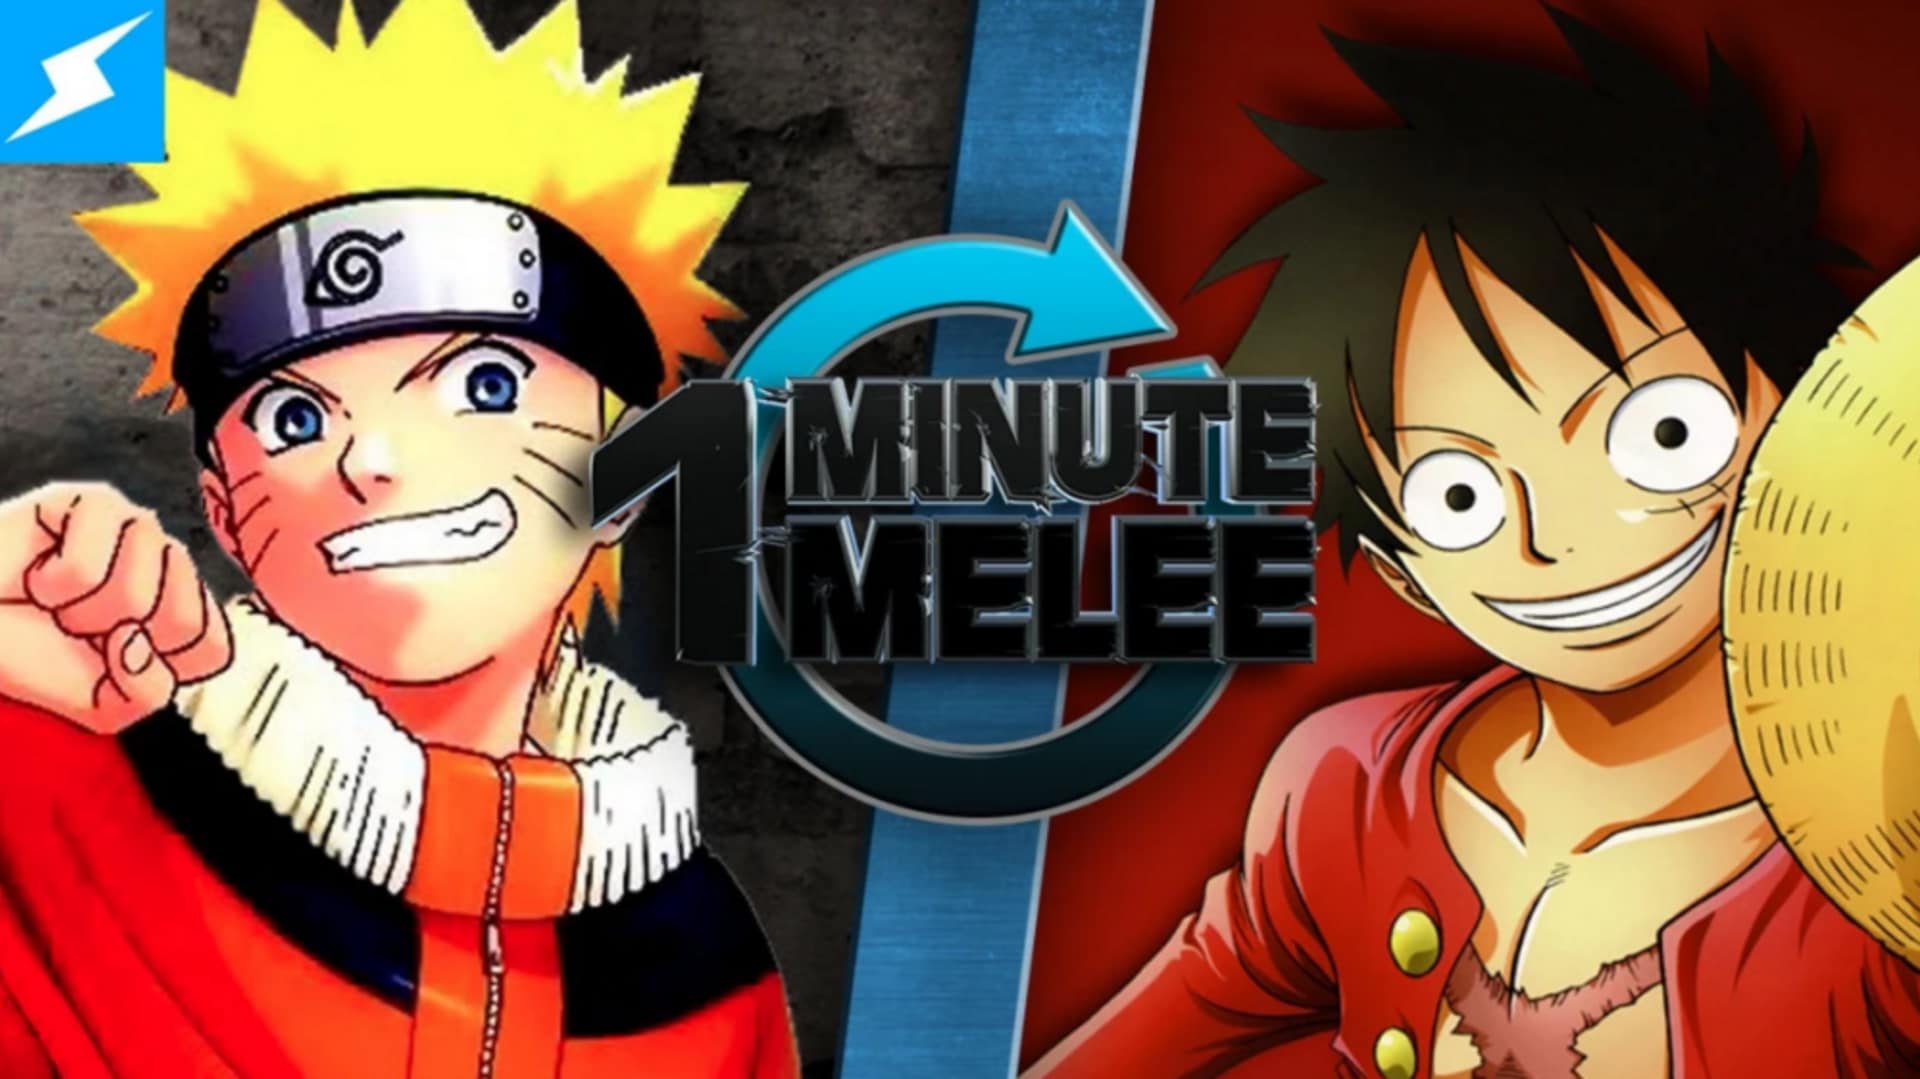 Naruto vs Luffy Podcast : r/deathbattle